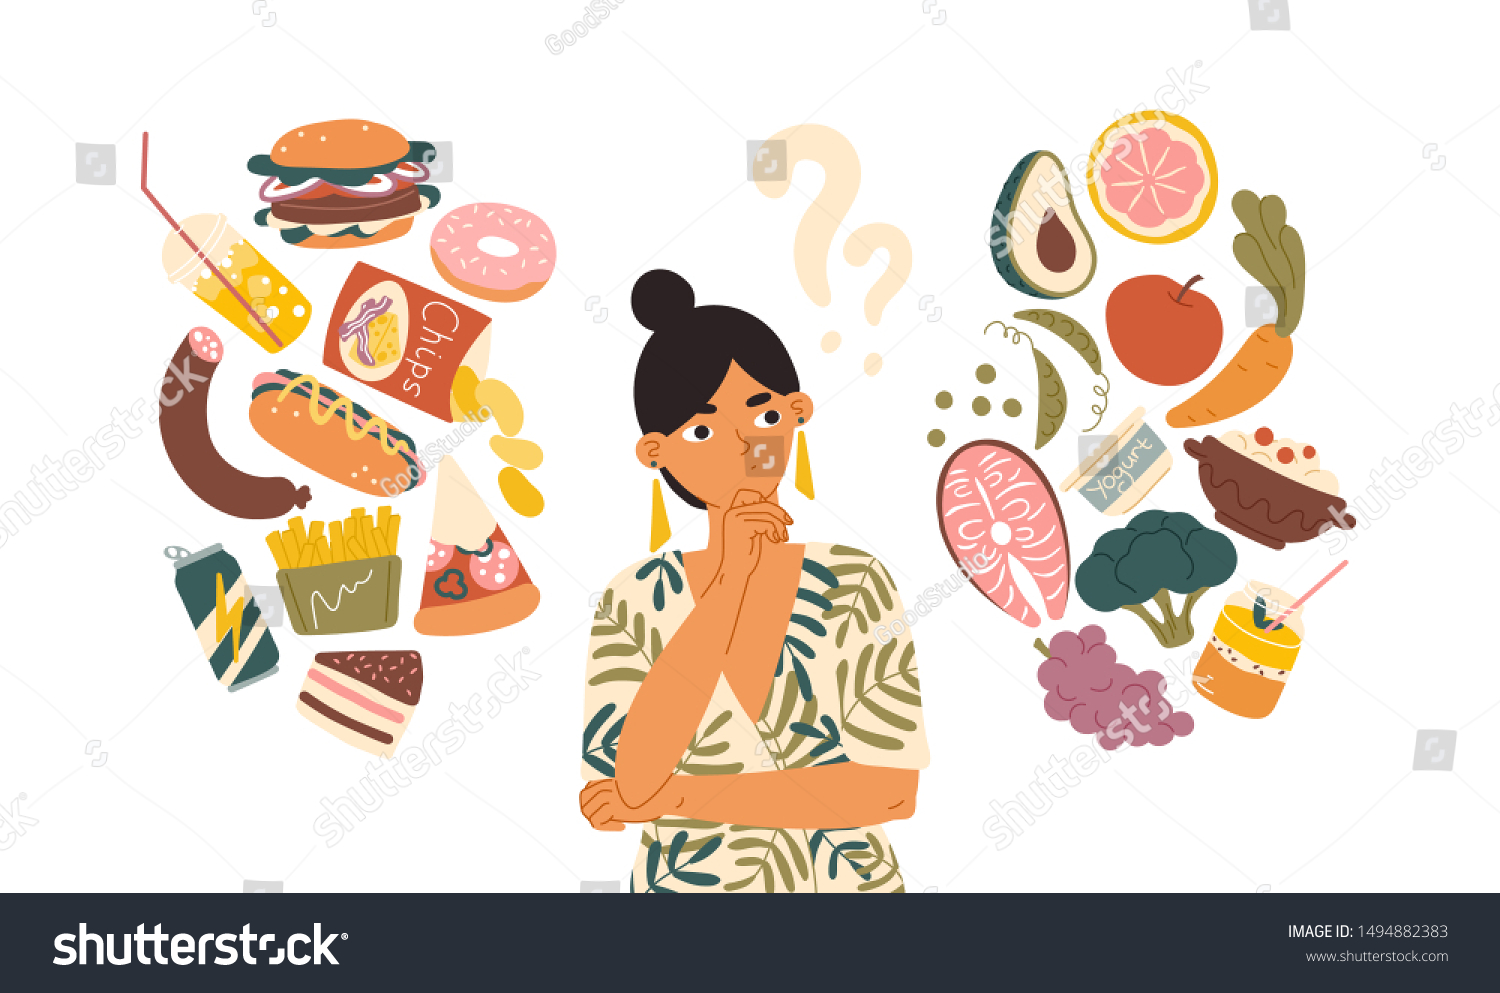 stock-vector-woman-choosing-between-healthy-and-unhealthy-food-concept-flat-vector-illustration-fastfood-vs-1494882383